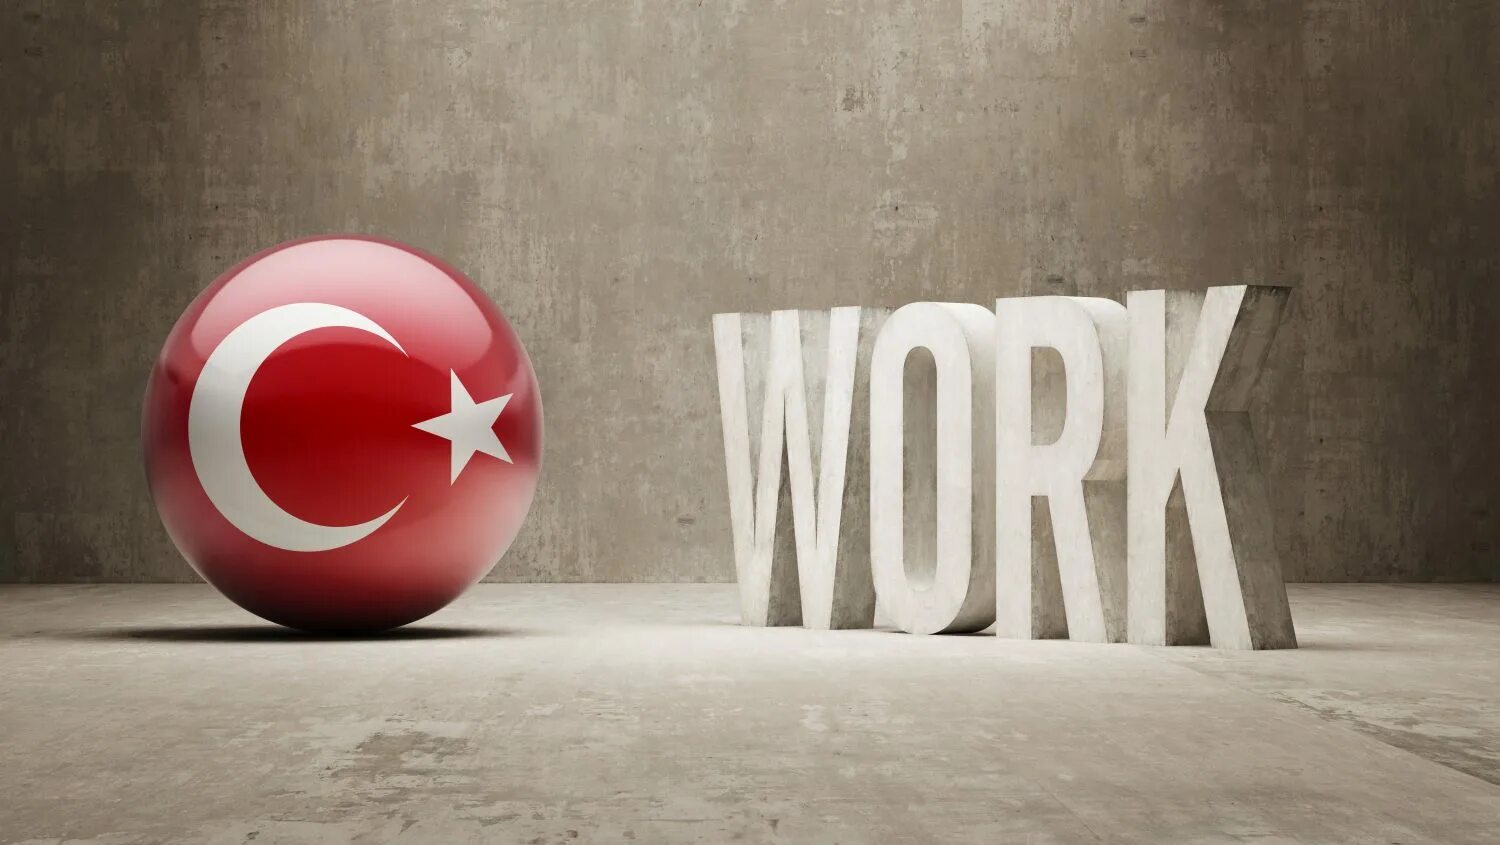 Work turkey. Работа в Турции. Ищу работу в Турции. Работа в Турции для русских. Работа для турецких граждан.